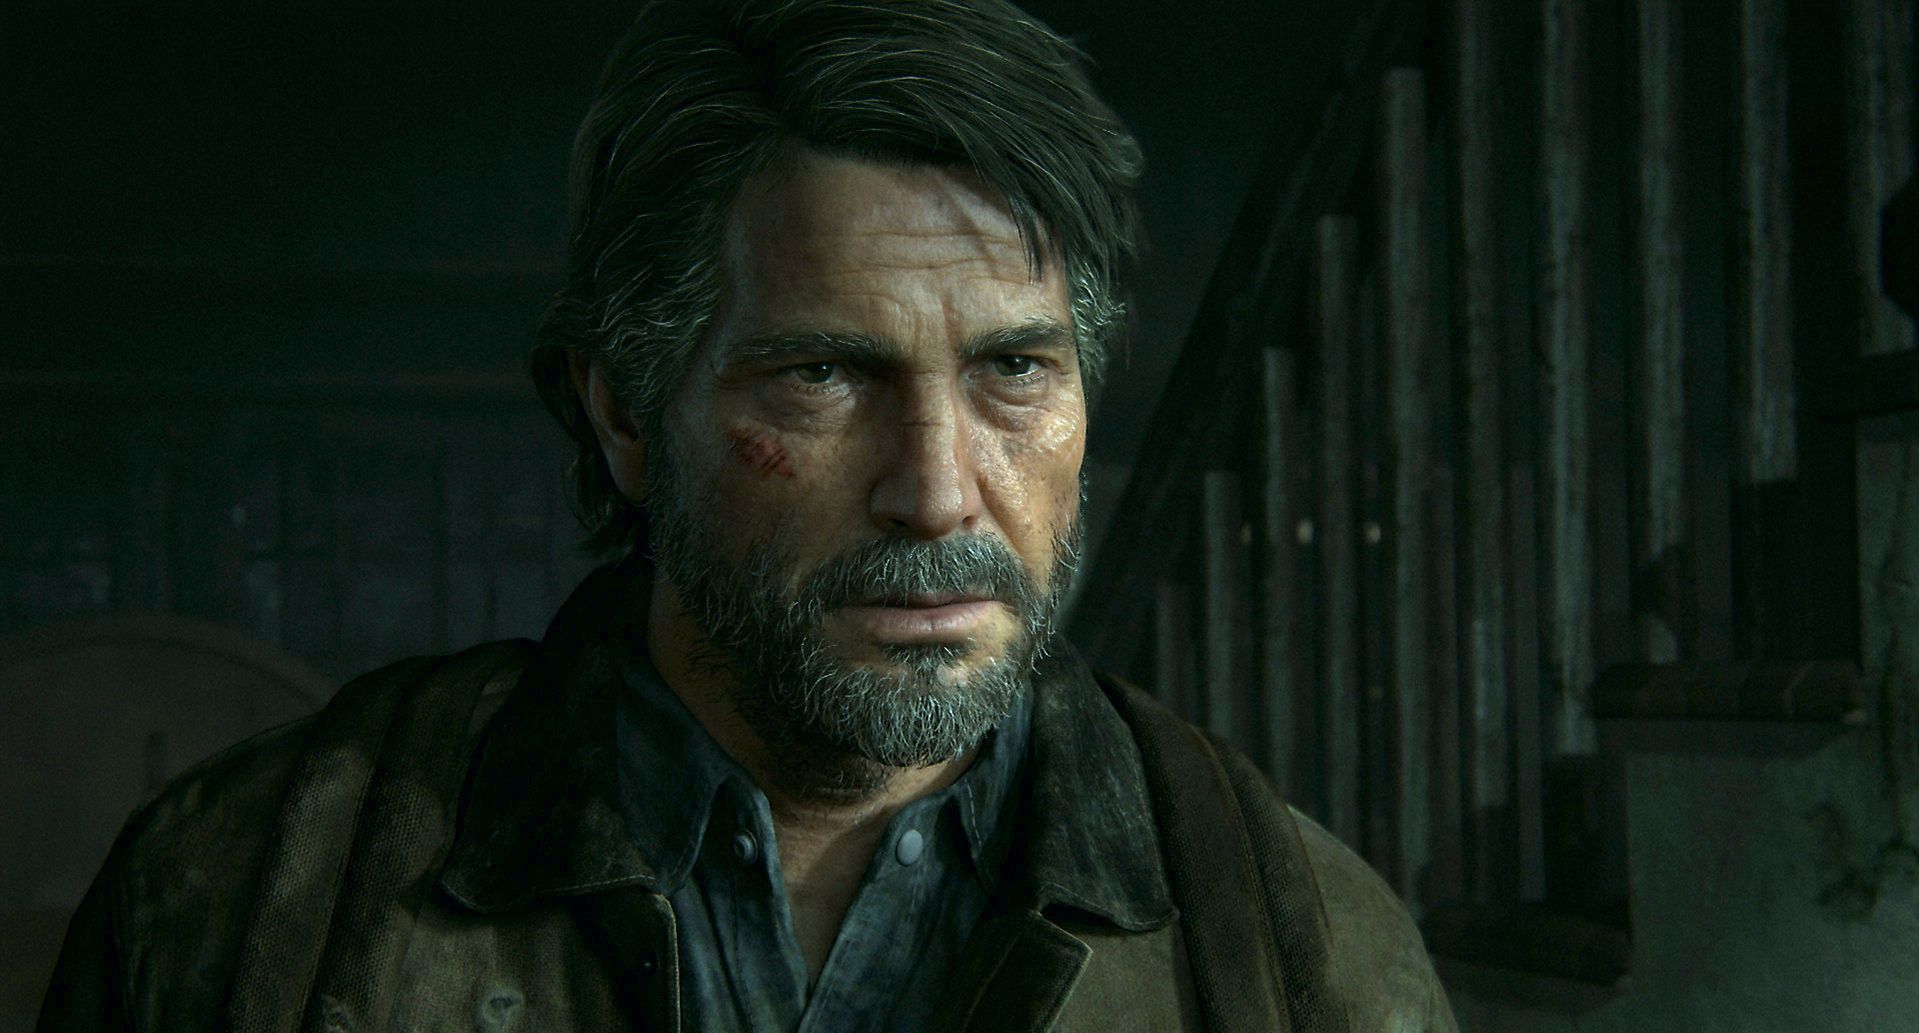 Last of Us 2' leaks: Major spoilers ruin the entire devastating plot